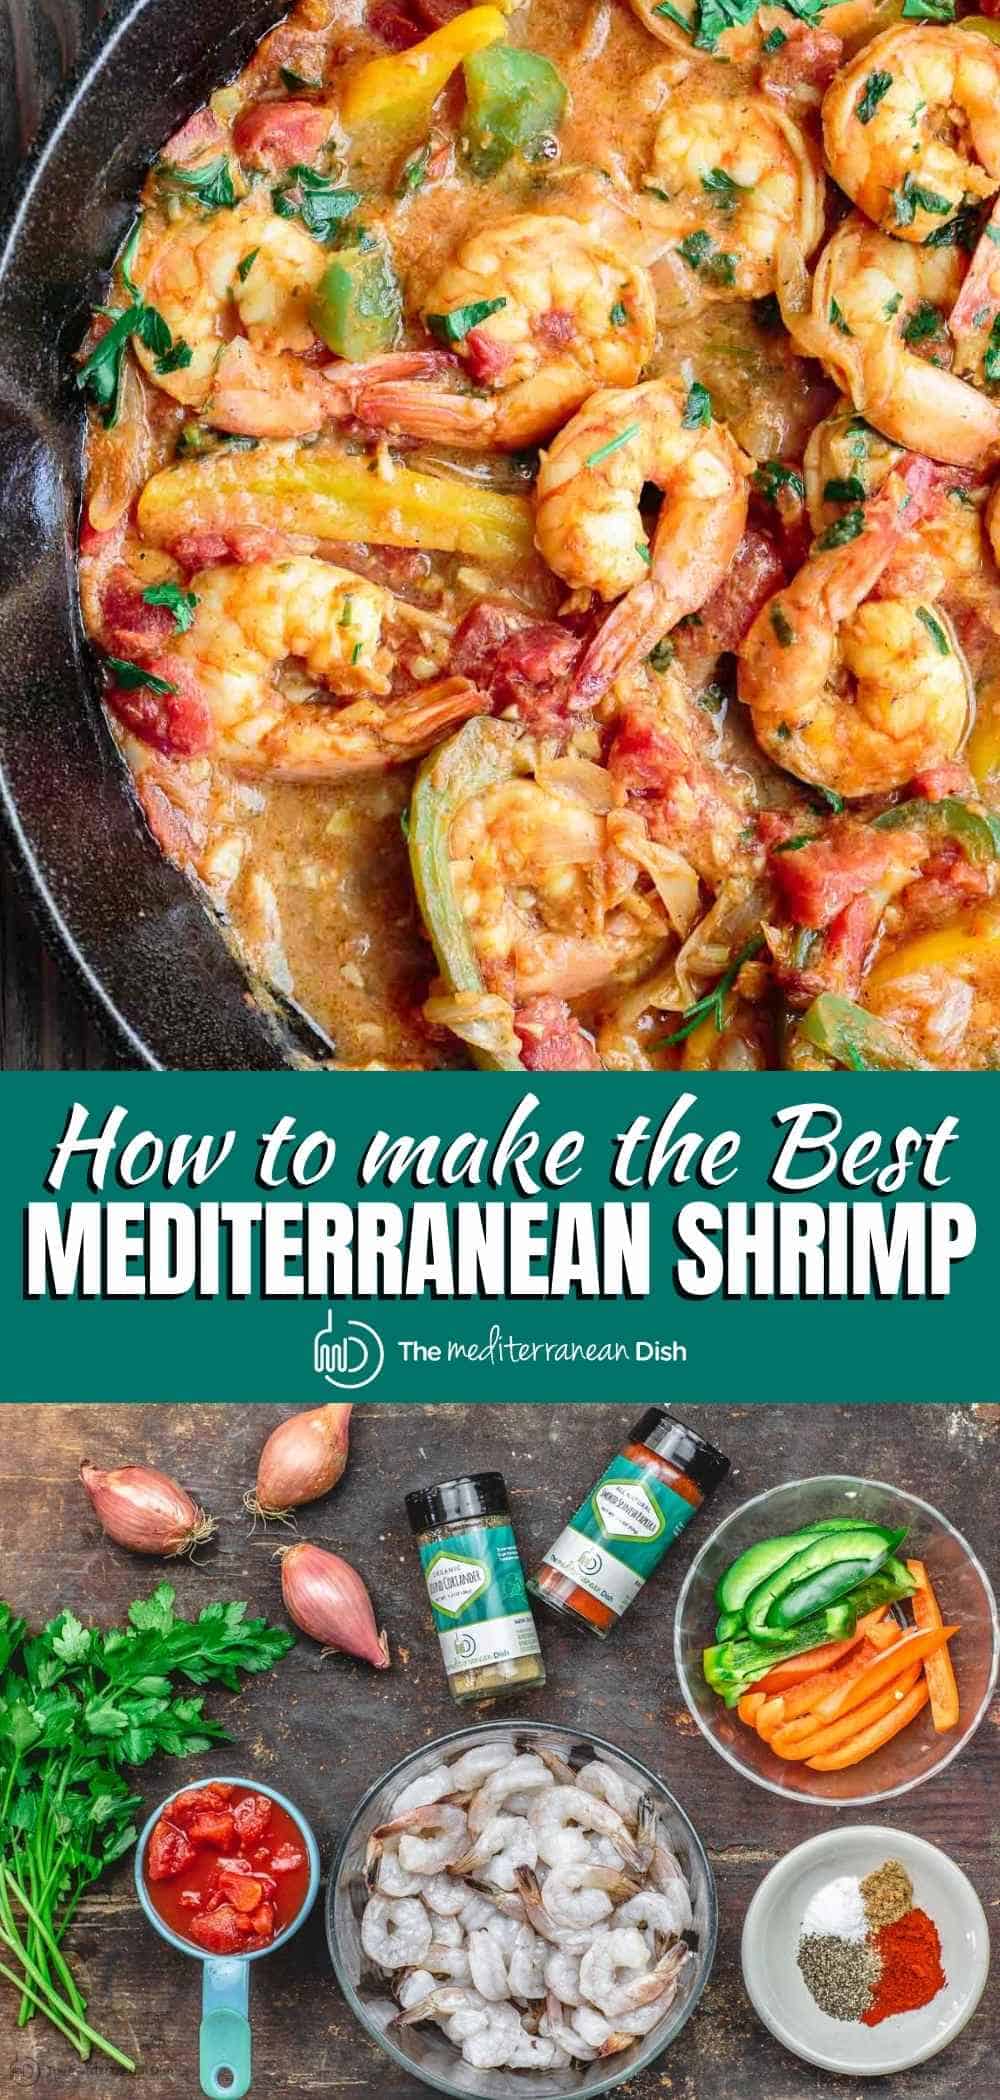 Mediterranean-Style Garlic Shrimp Recipe | The Mediterranean Dish